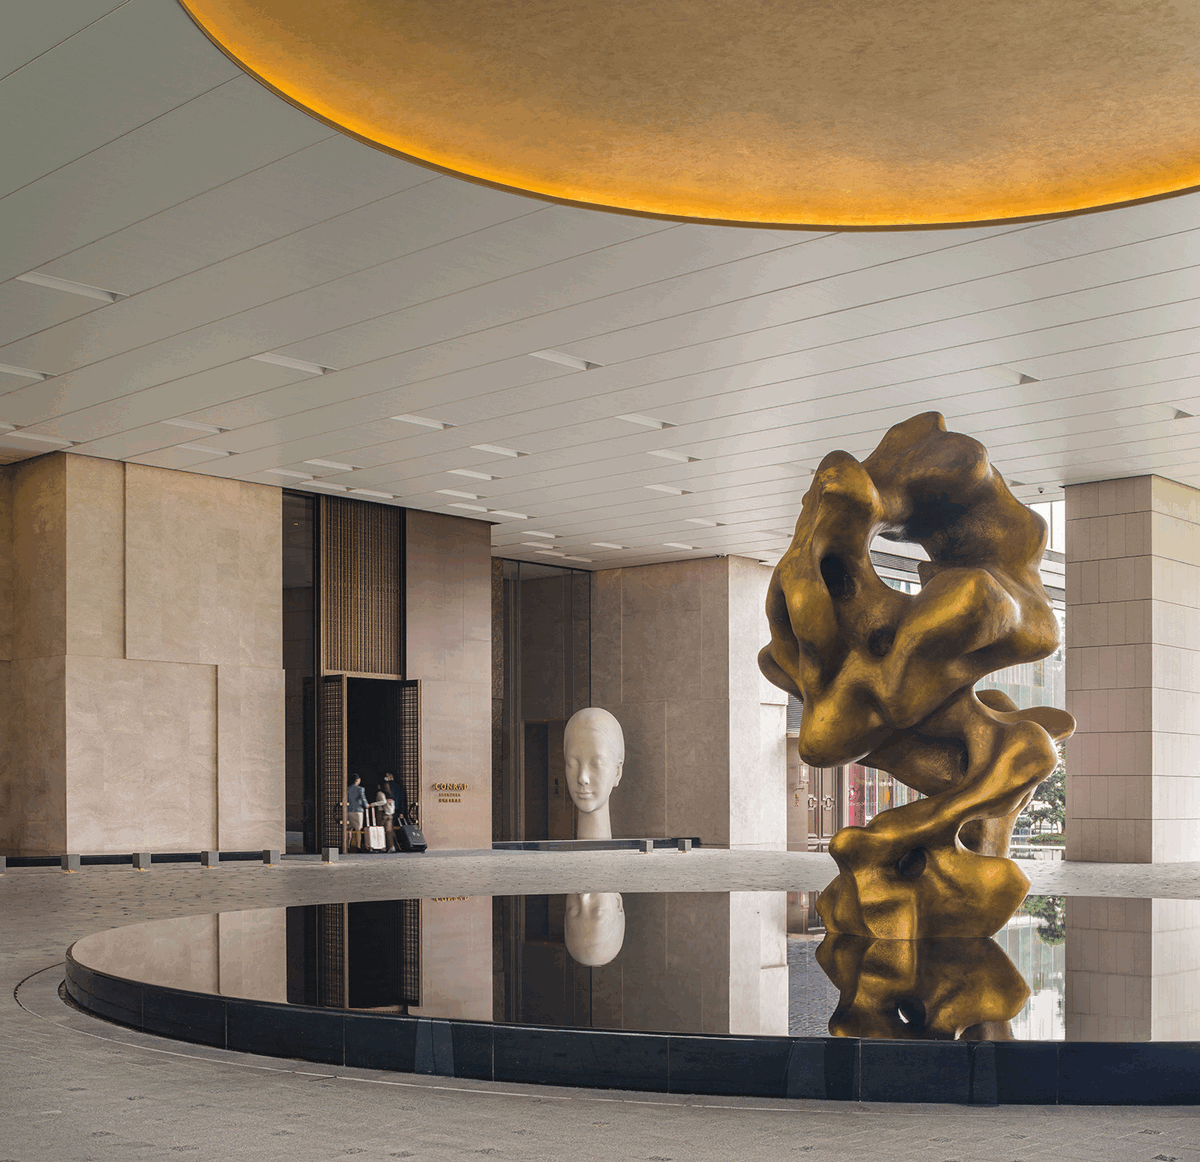 New Luxury Conrad Hotel Shenzhen